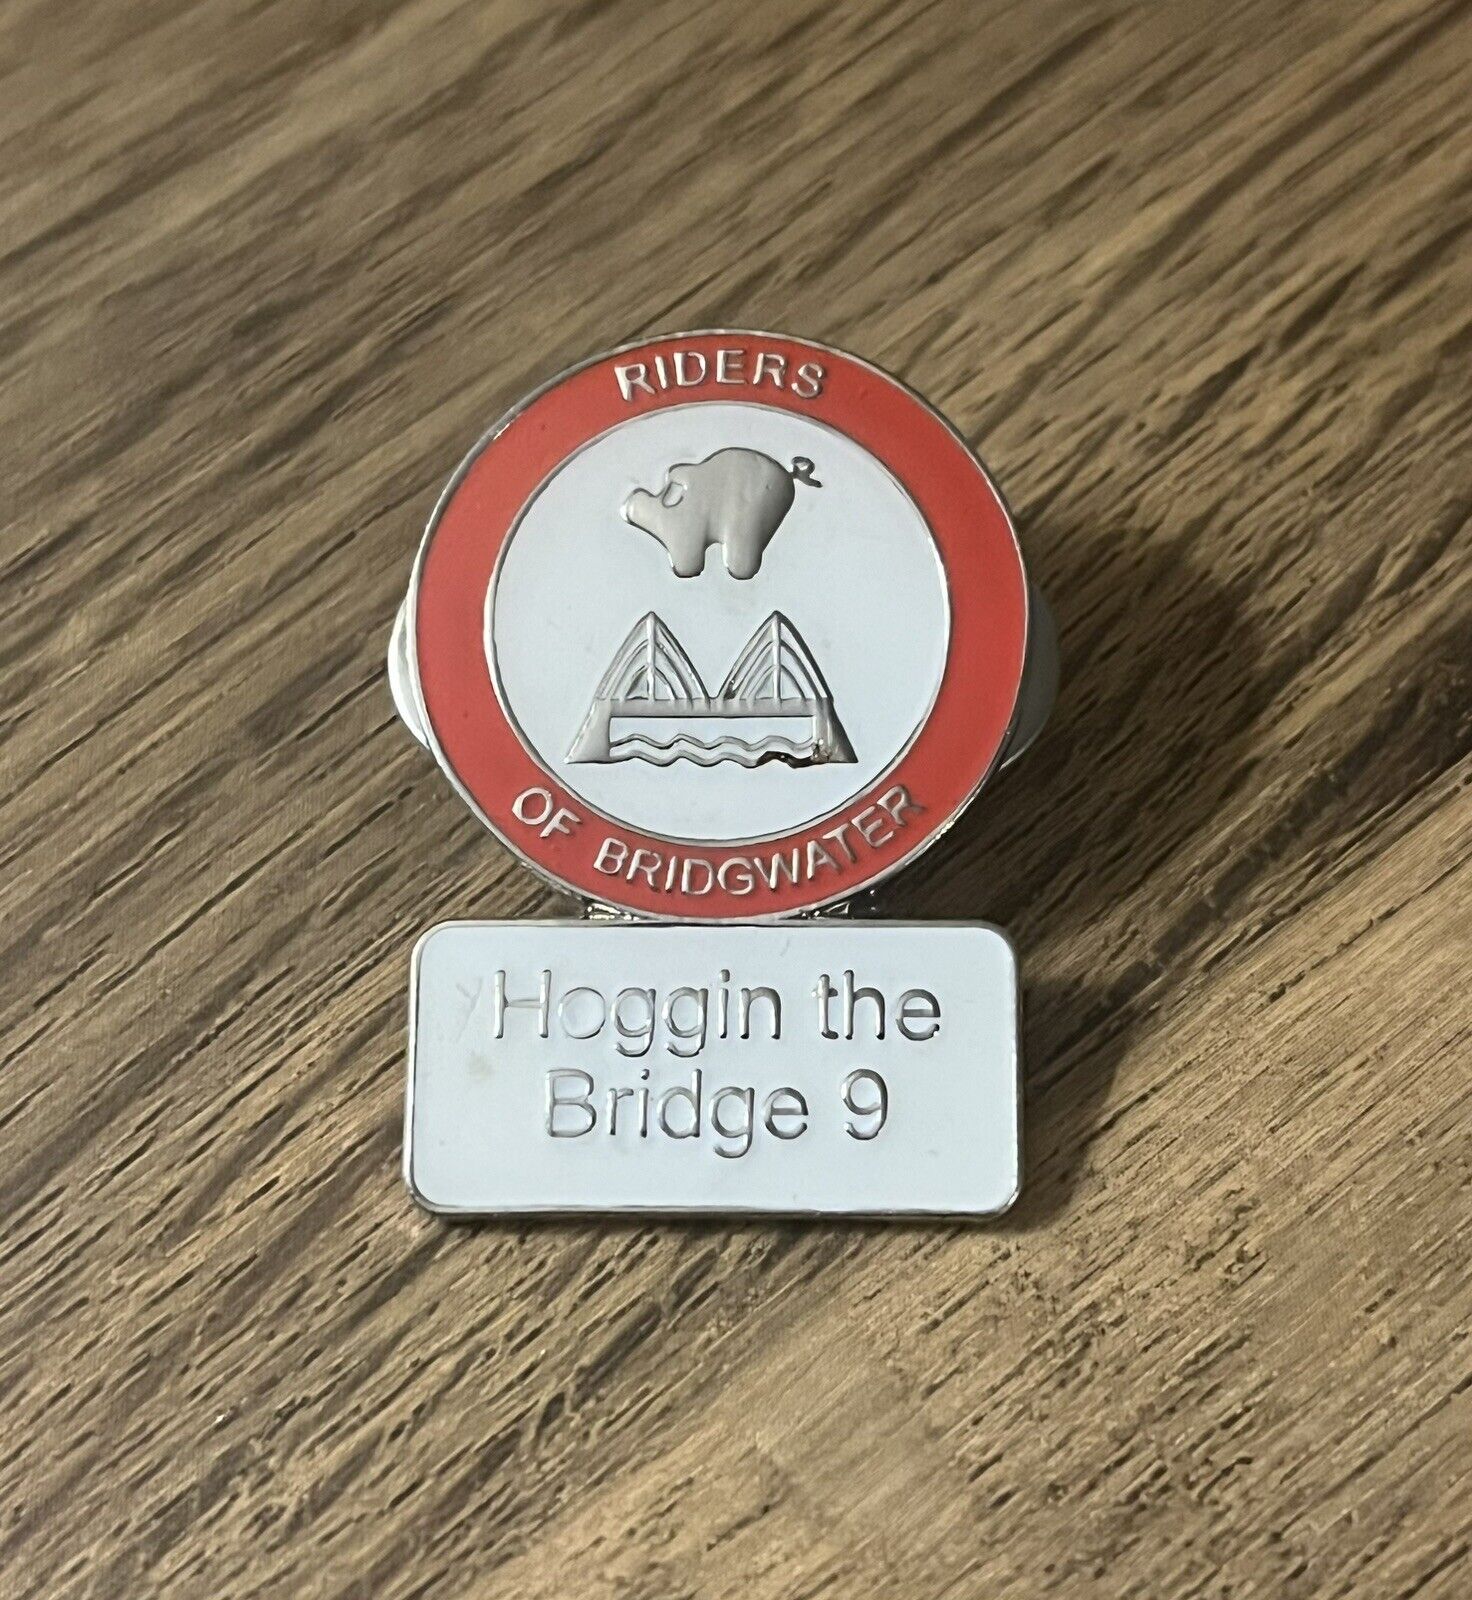 HARLEY DAVIDSON HOGGIN THE BRIDGE 9 RIDERS OF BRIDGEWATER  Pin Badge